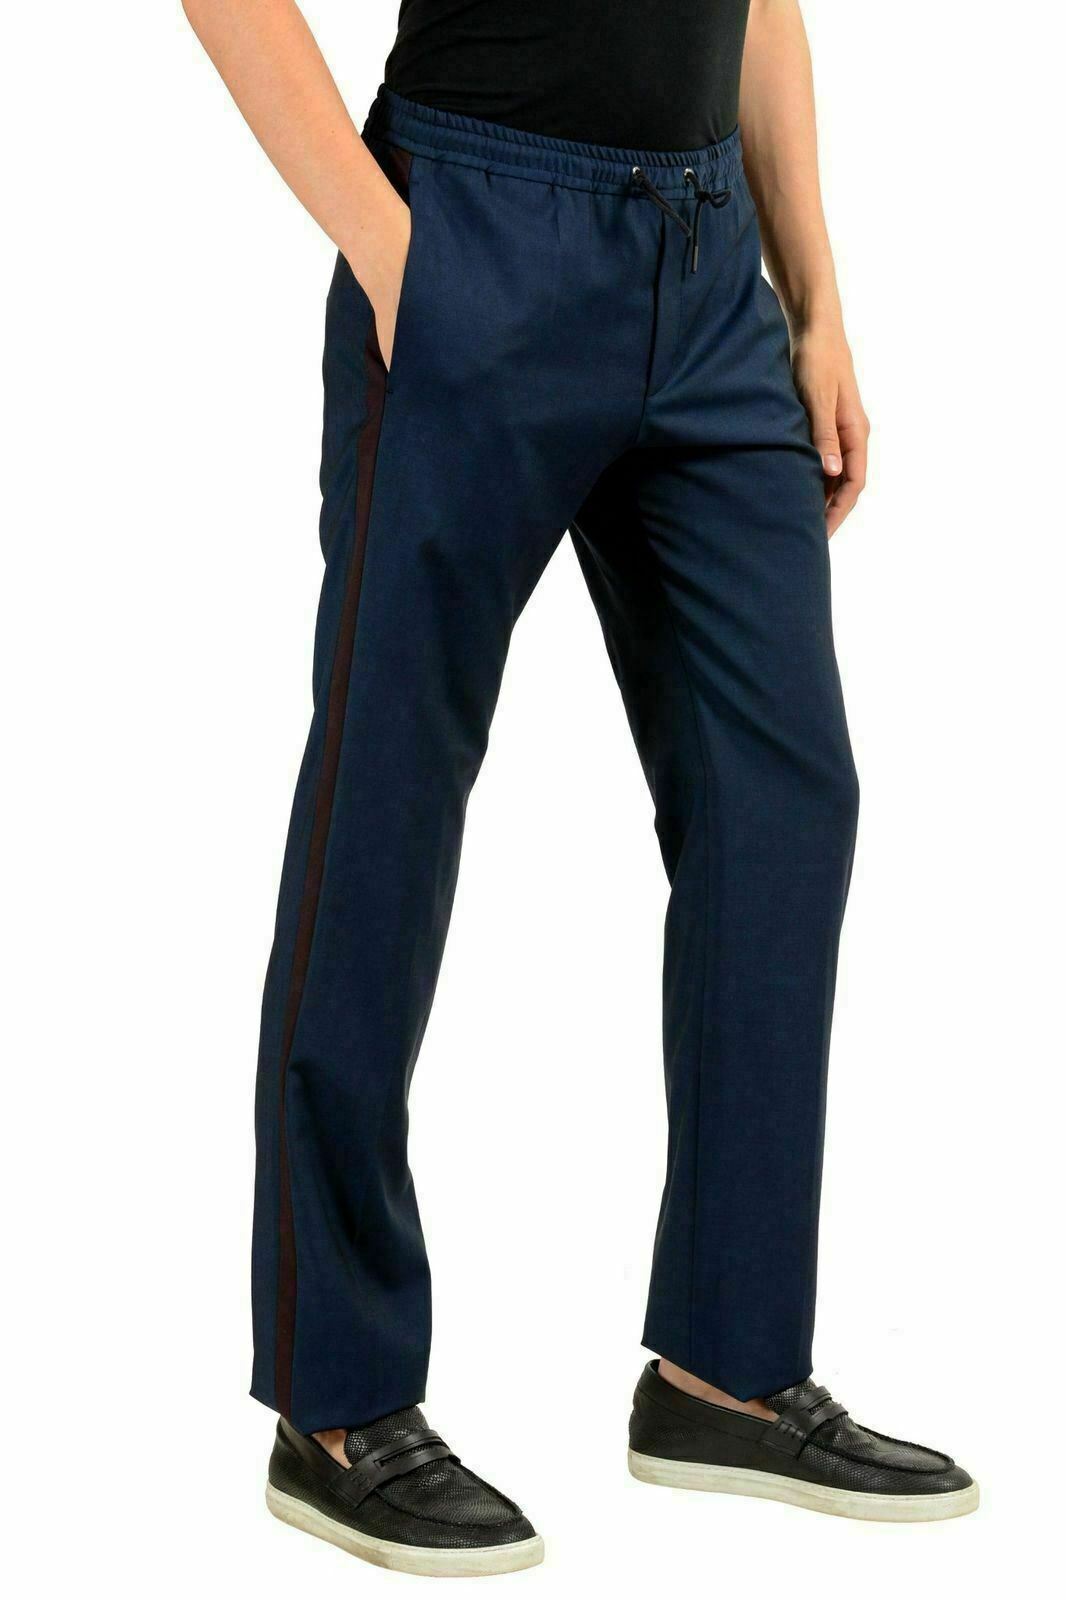 Hugo Boss "Barne1" Men's Blue Wool Mohair Casual Pants US 30 IT 46 | eBay